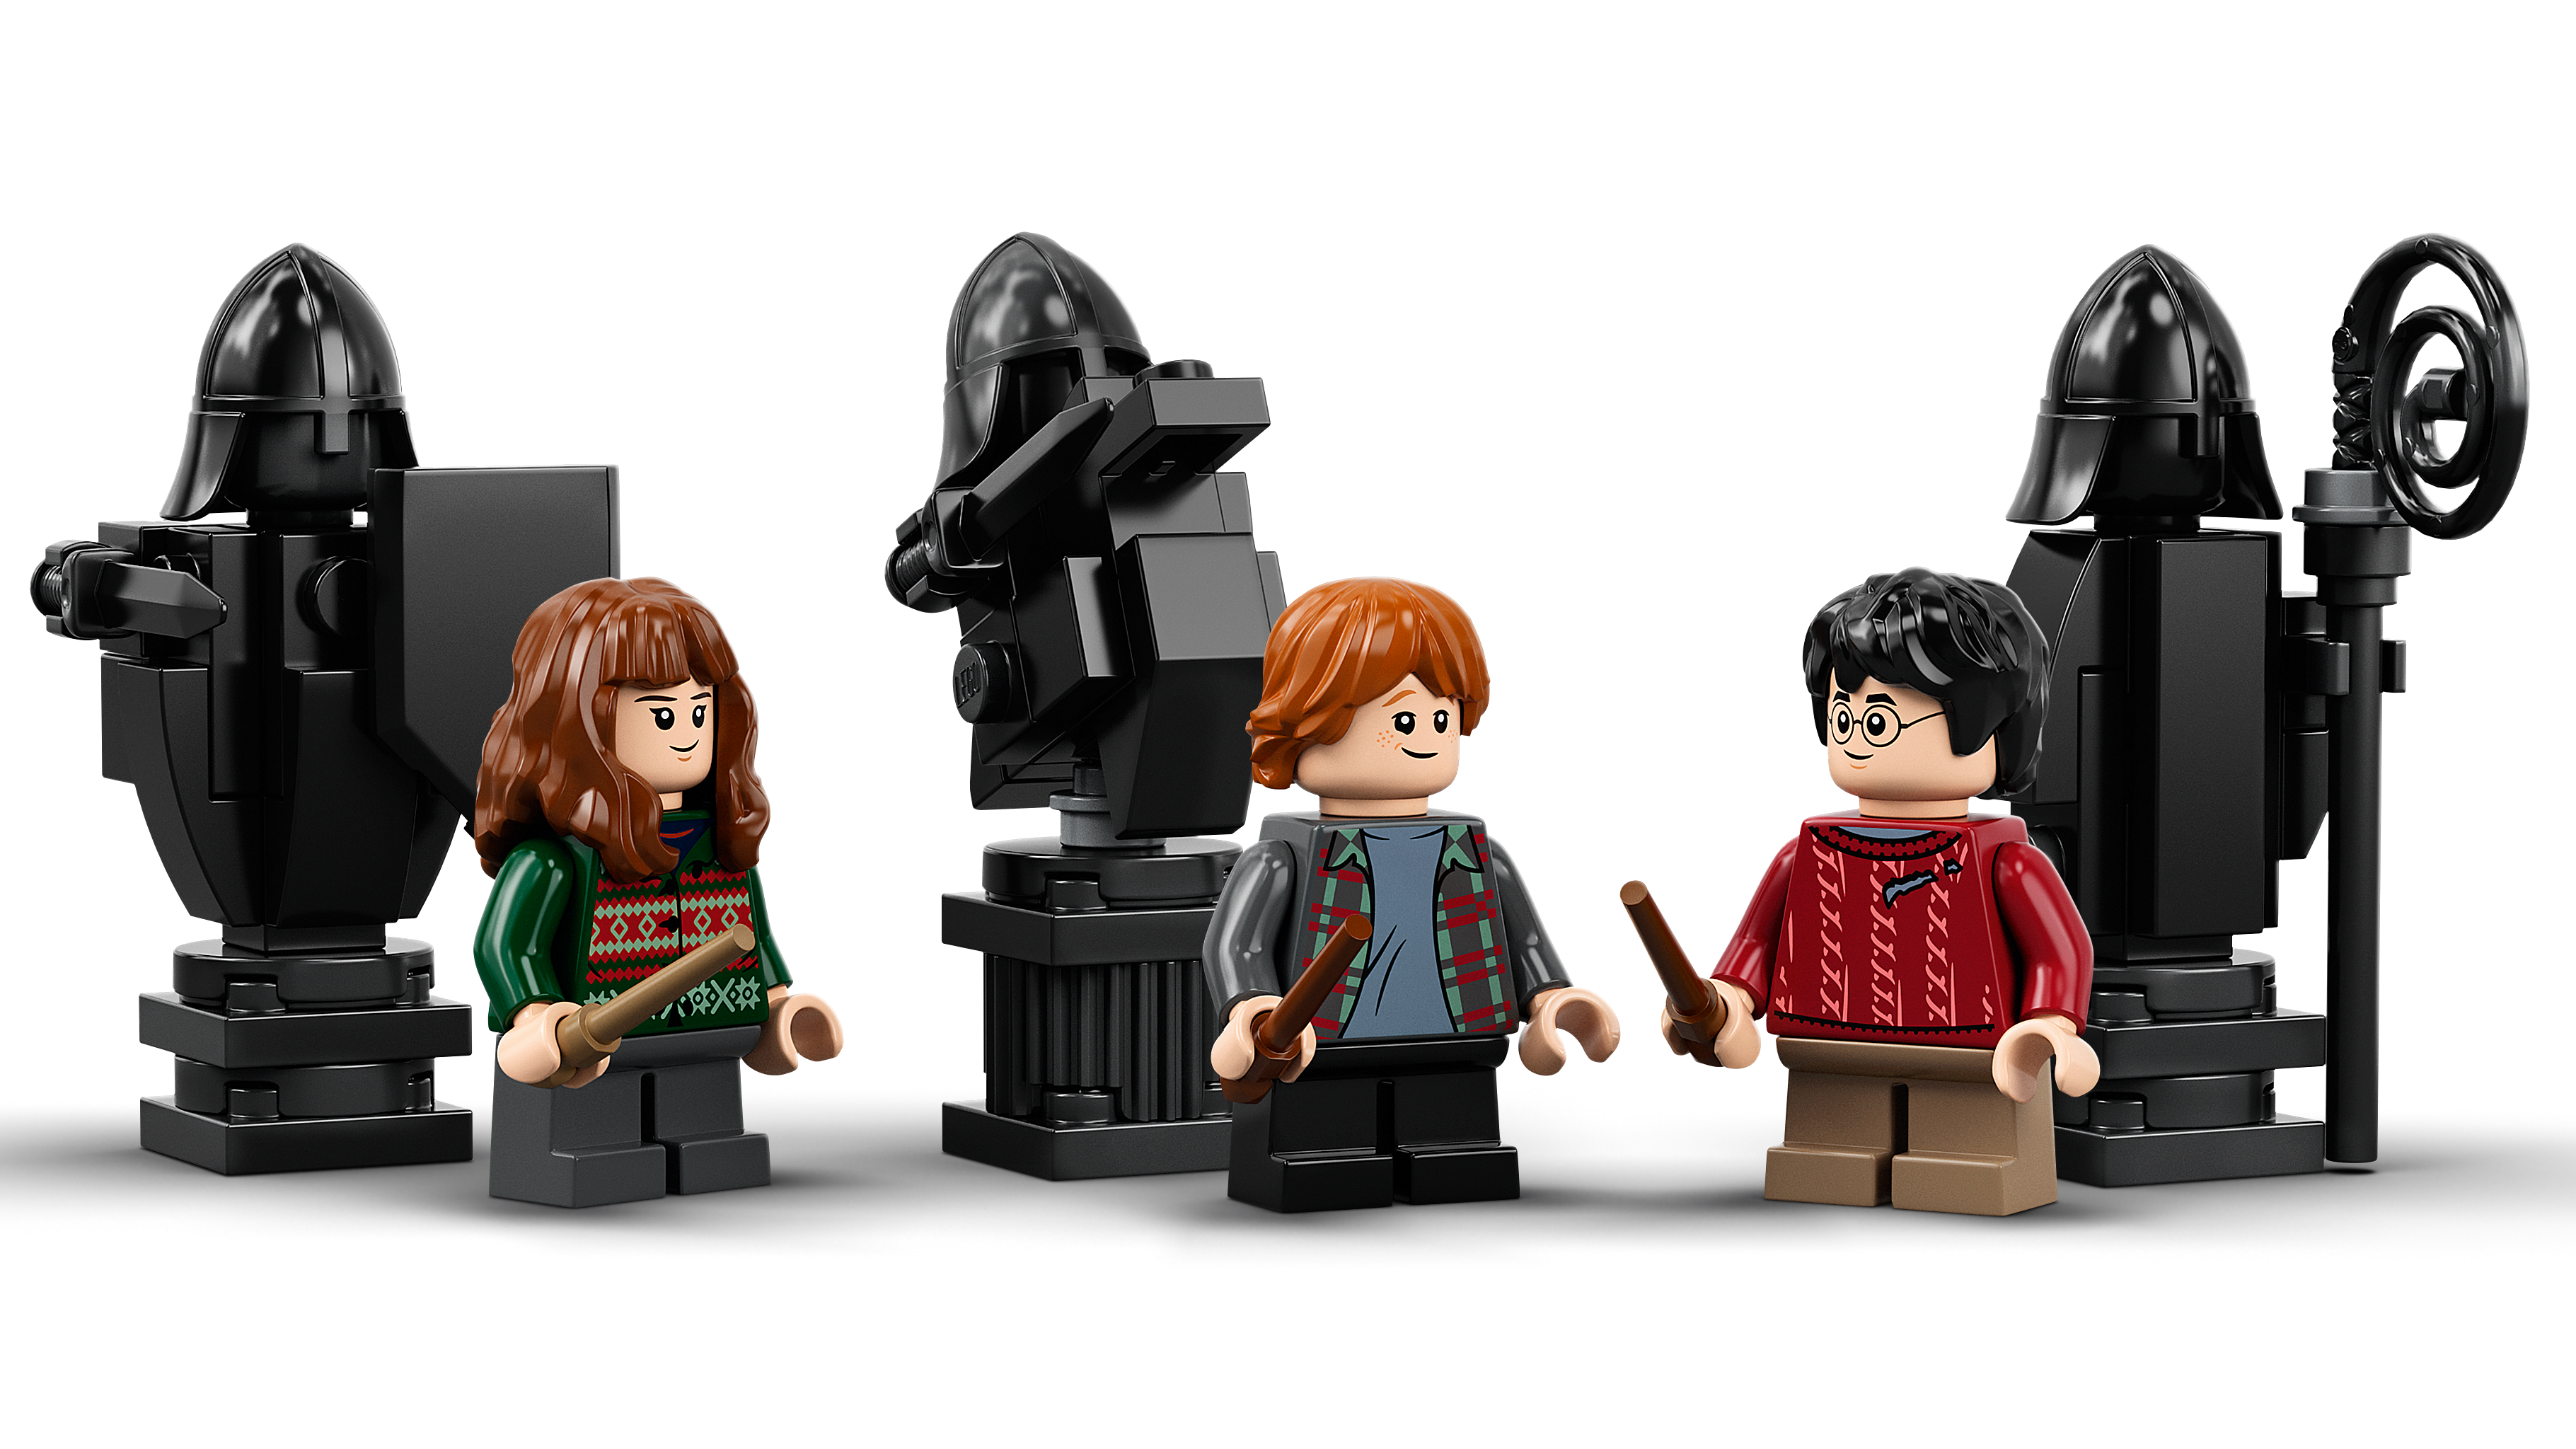 LEGO Harry Potter Jogo de Xadrez dos Feiticeiros de Hogwarts 76392